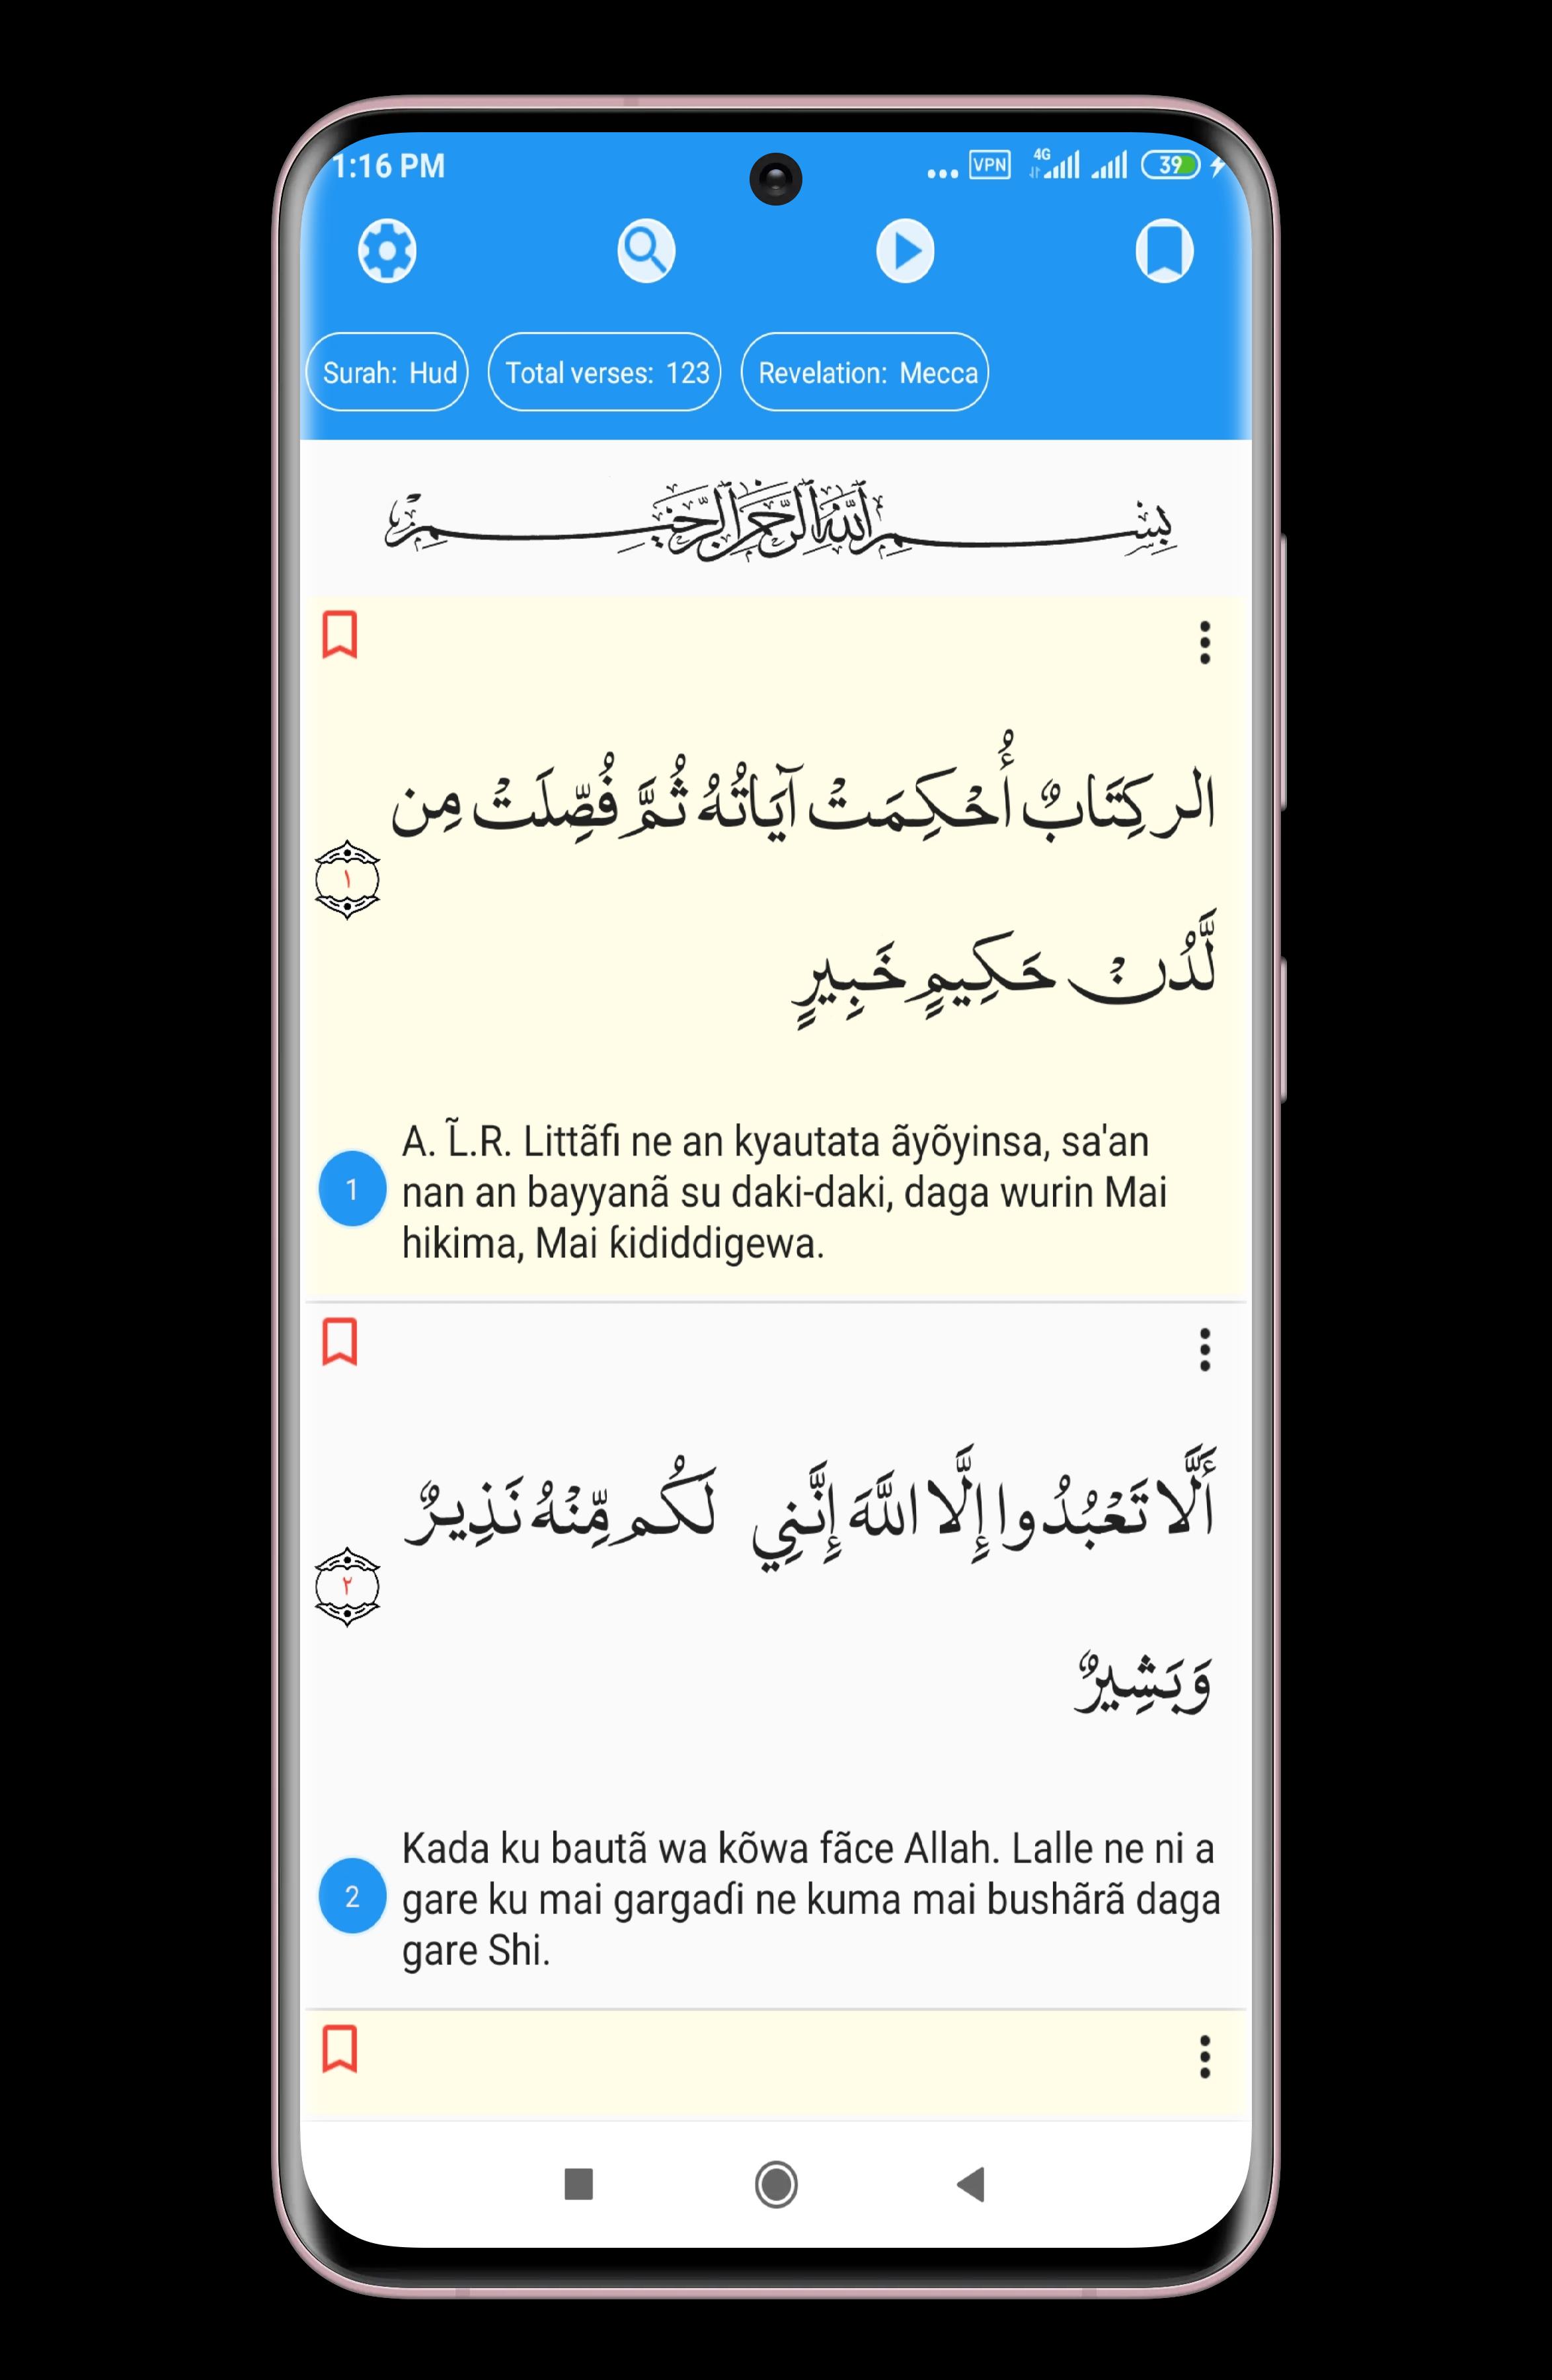 Hausa Qur'an - Qur'an with Hausa Translation 1.1 Screenshot 6